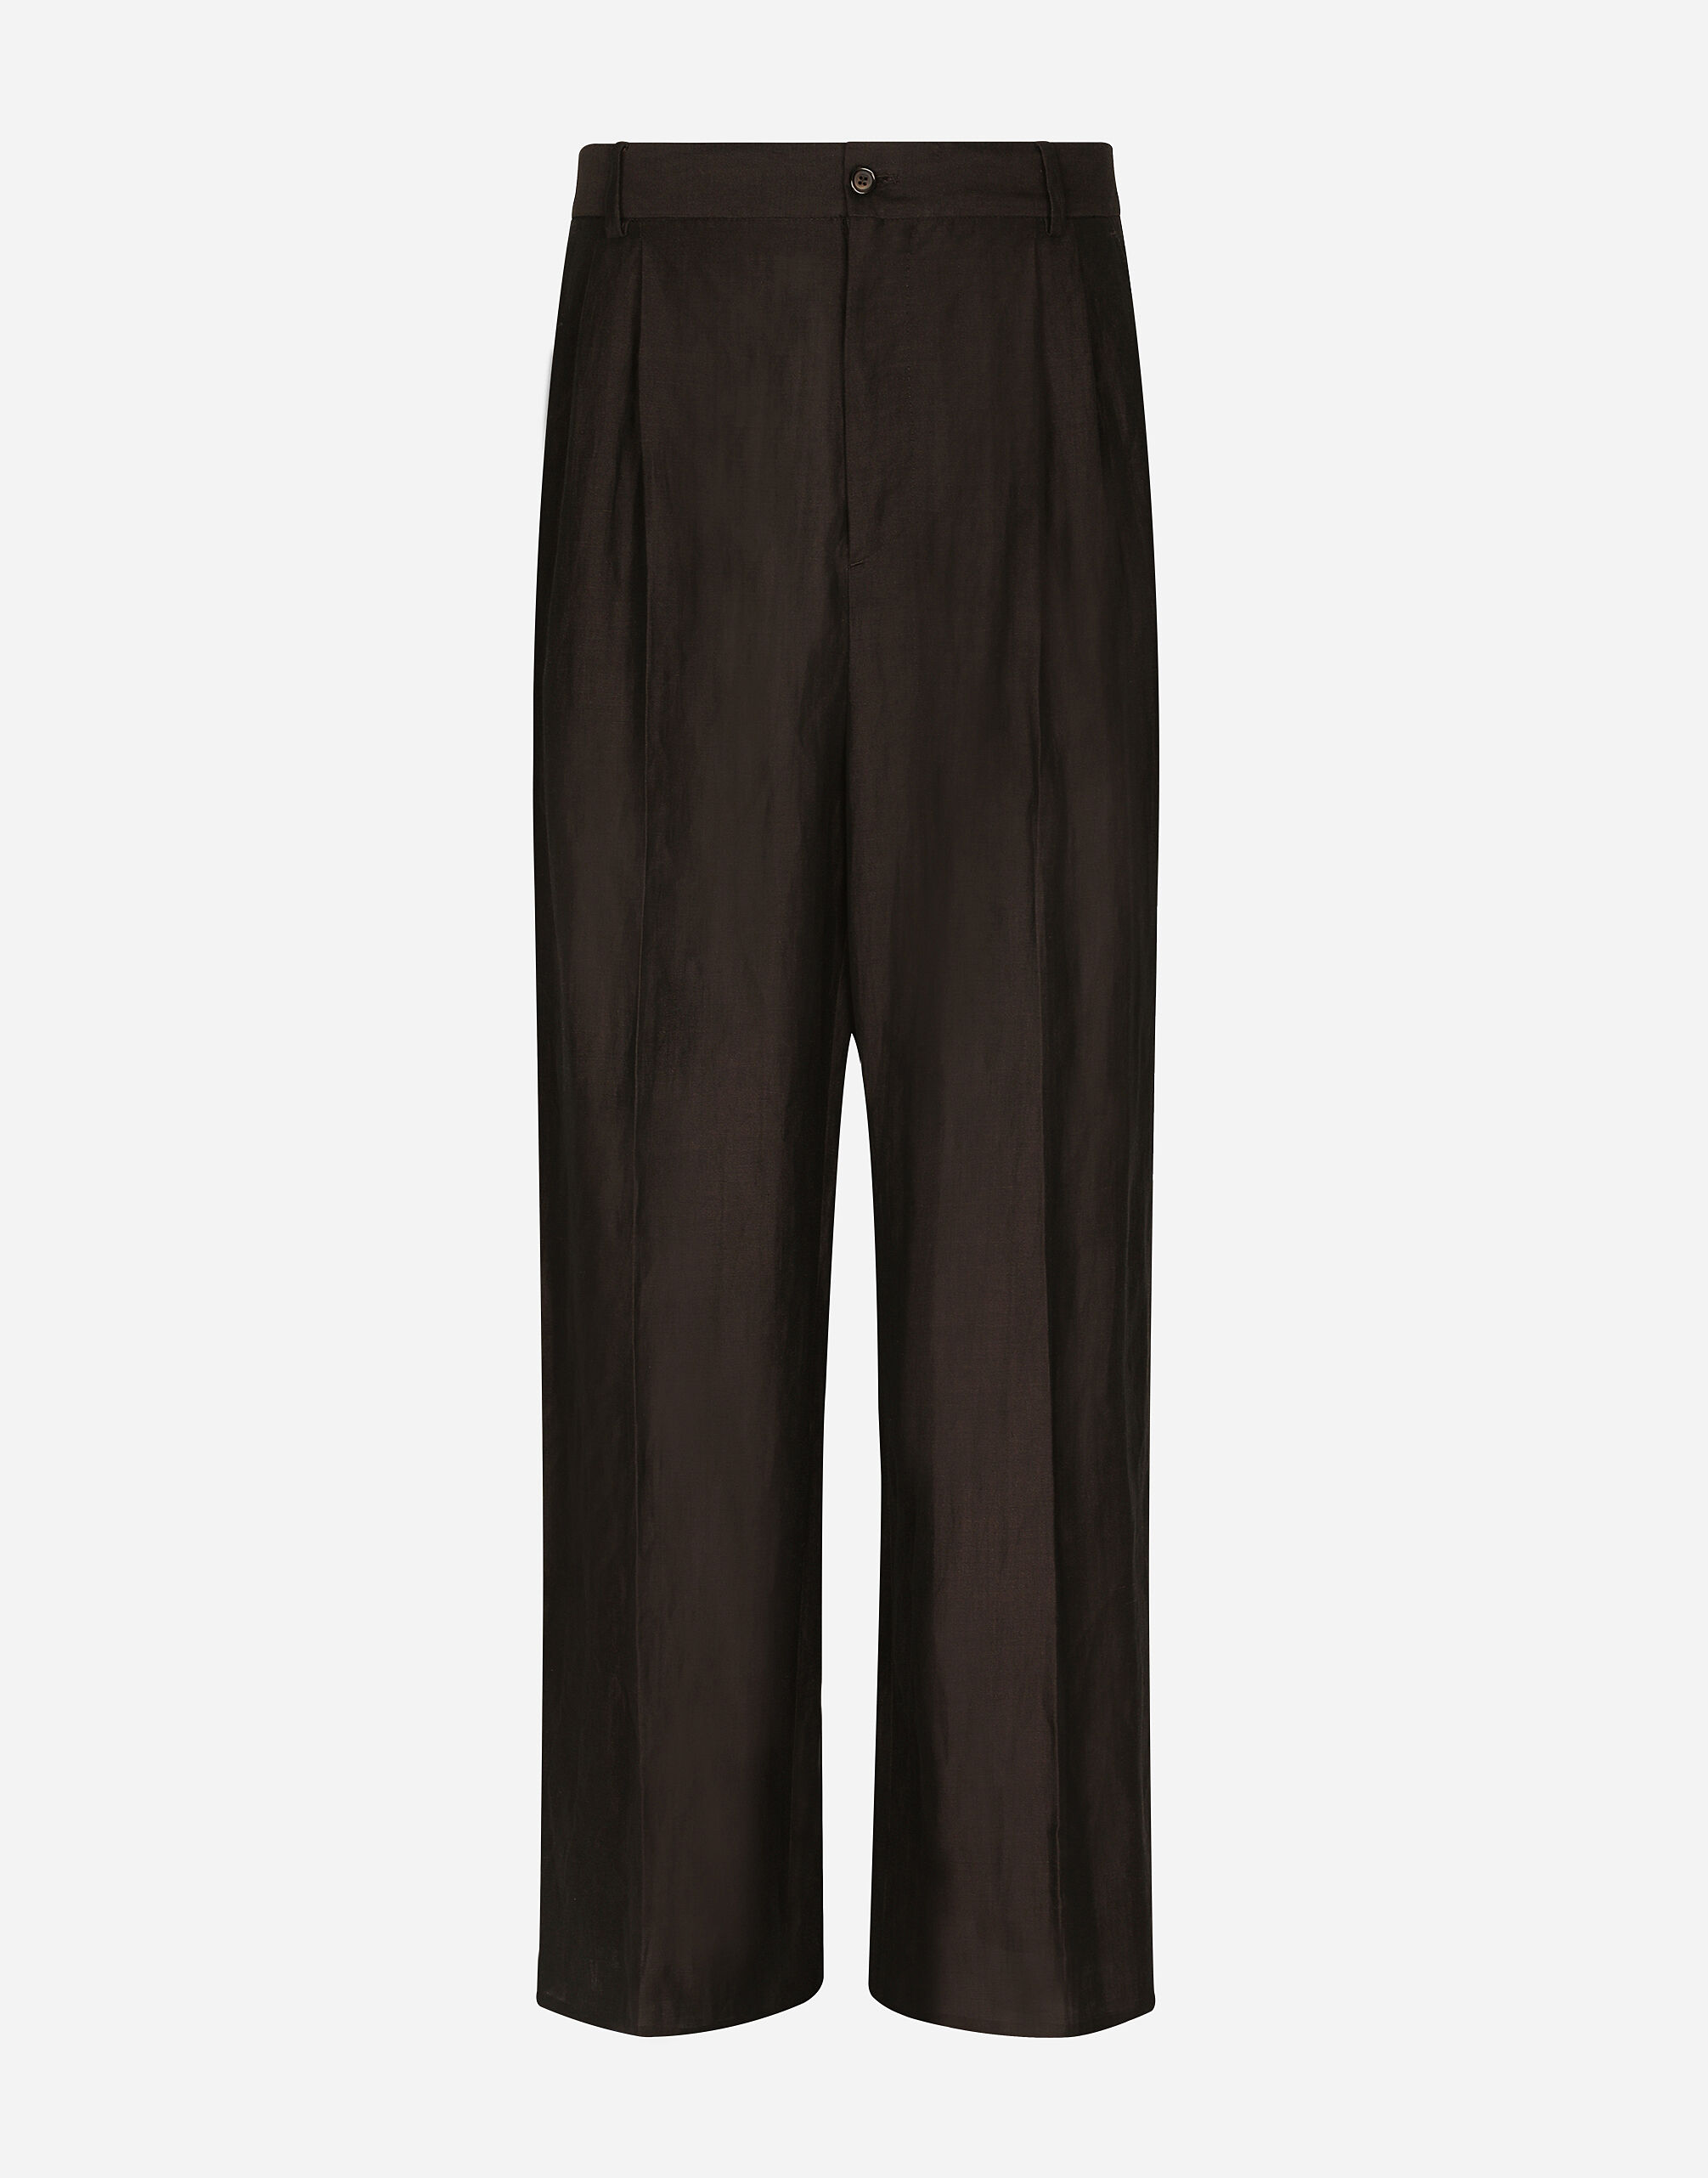 Dolce & Gabbana Tailored viscose and linen pants Brown GP01PTFU60L